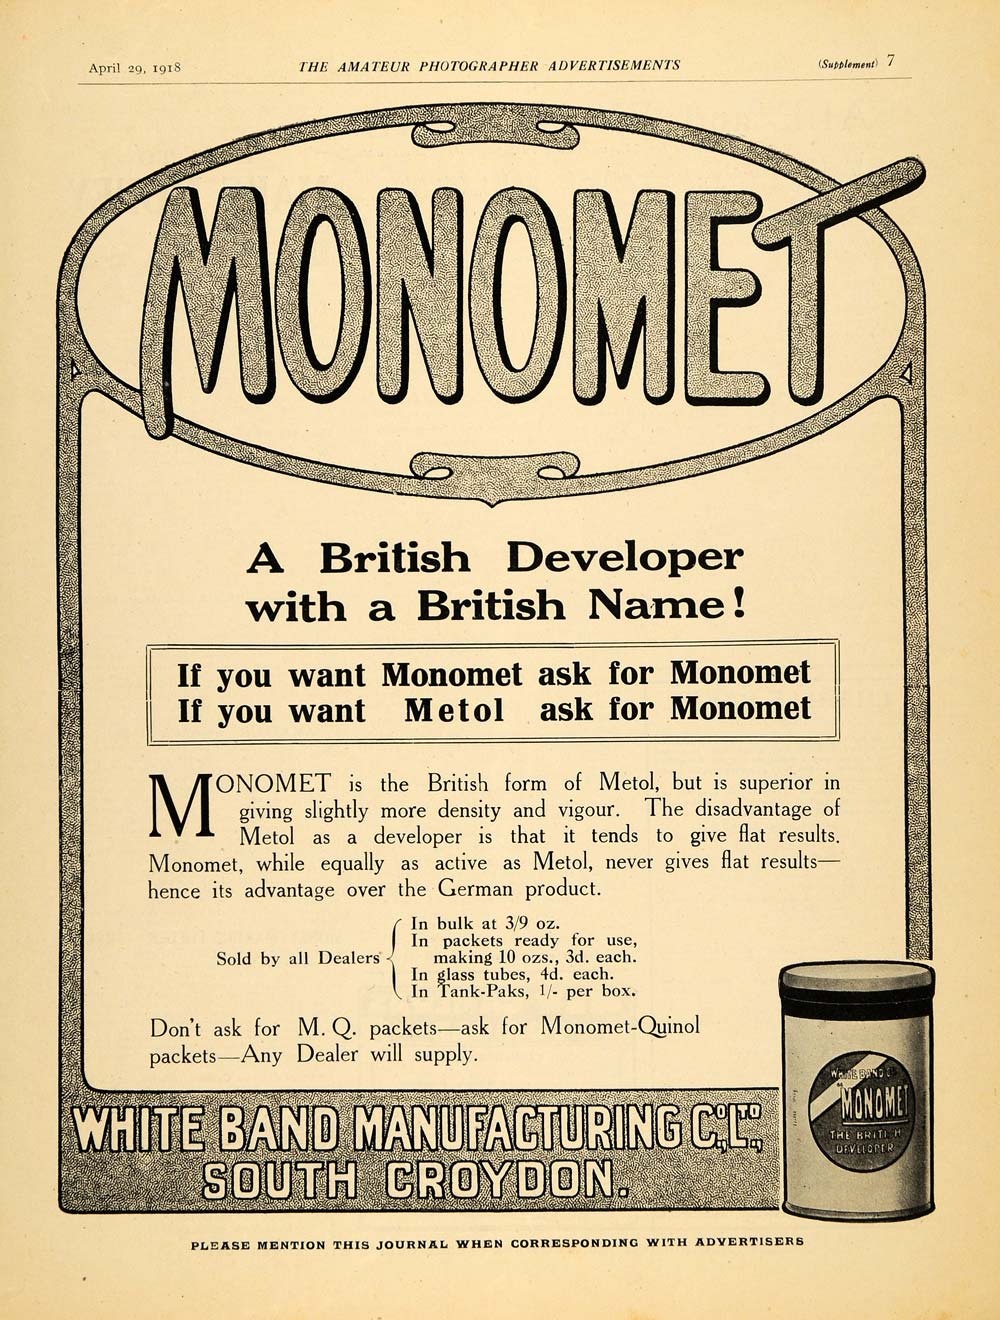 1918 Ad British Photograph Film Developer Monomet White Band South Croydon AMP1